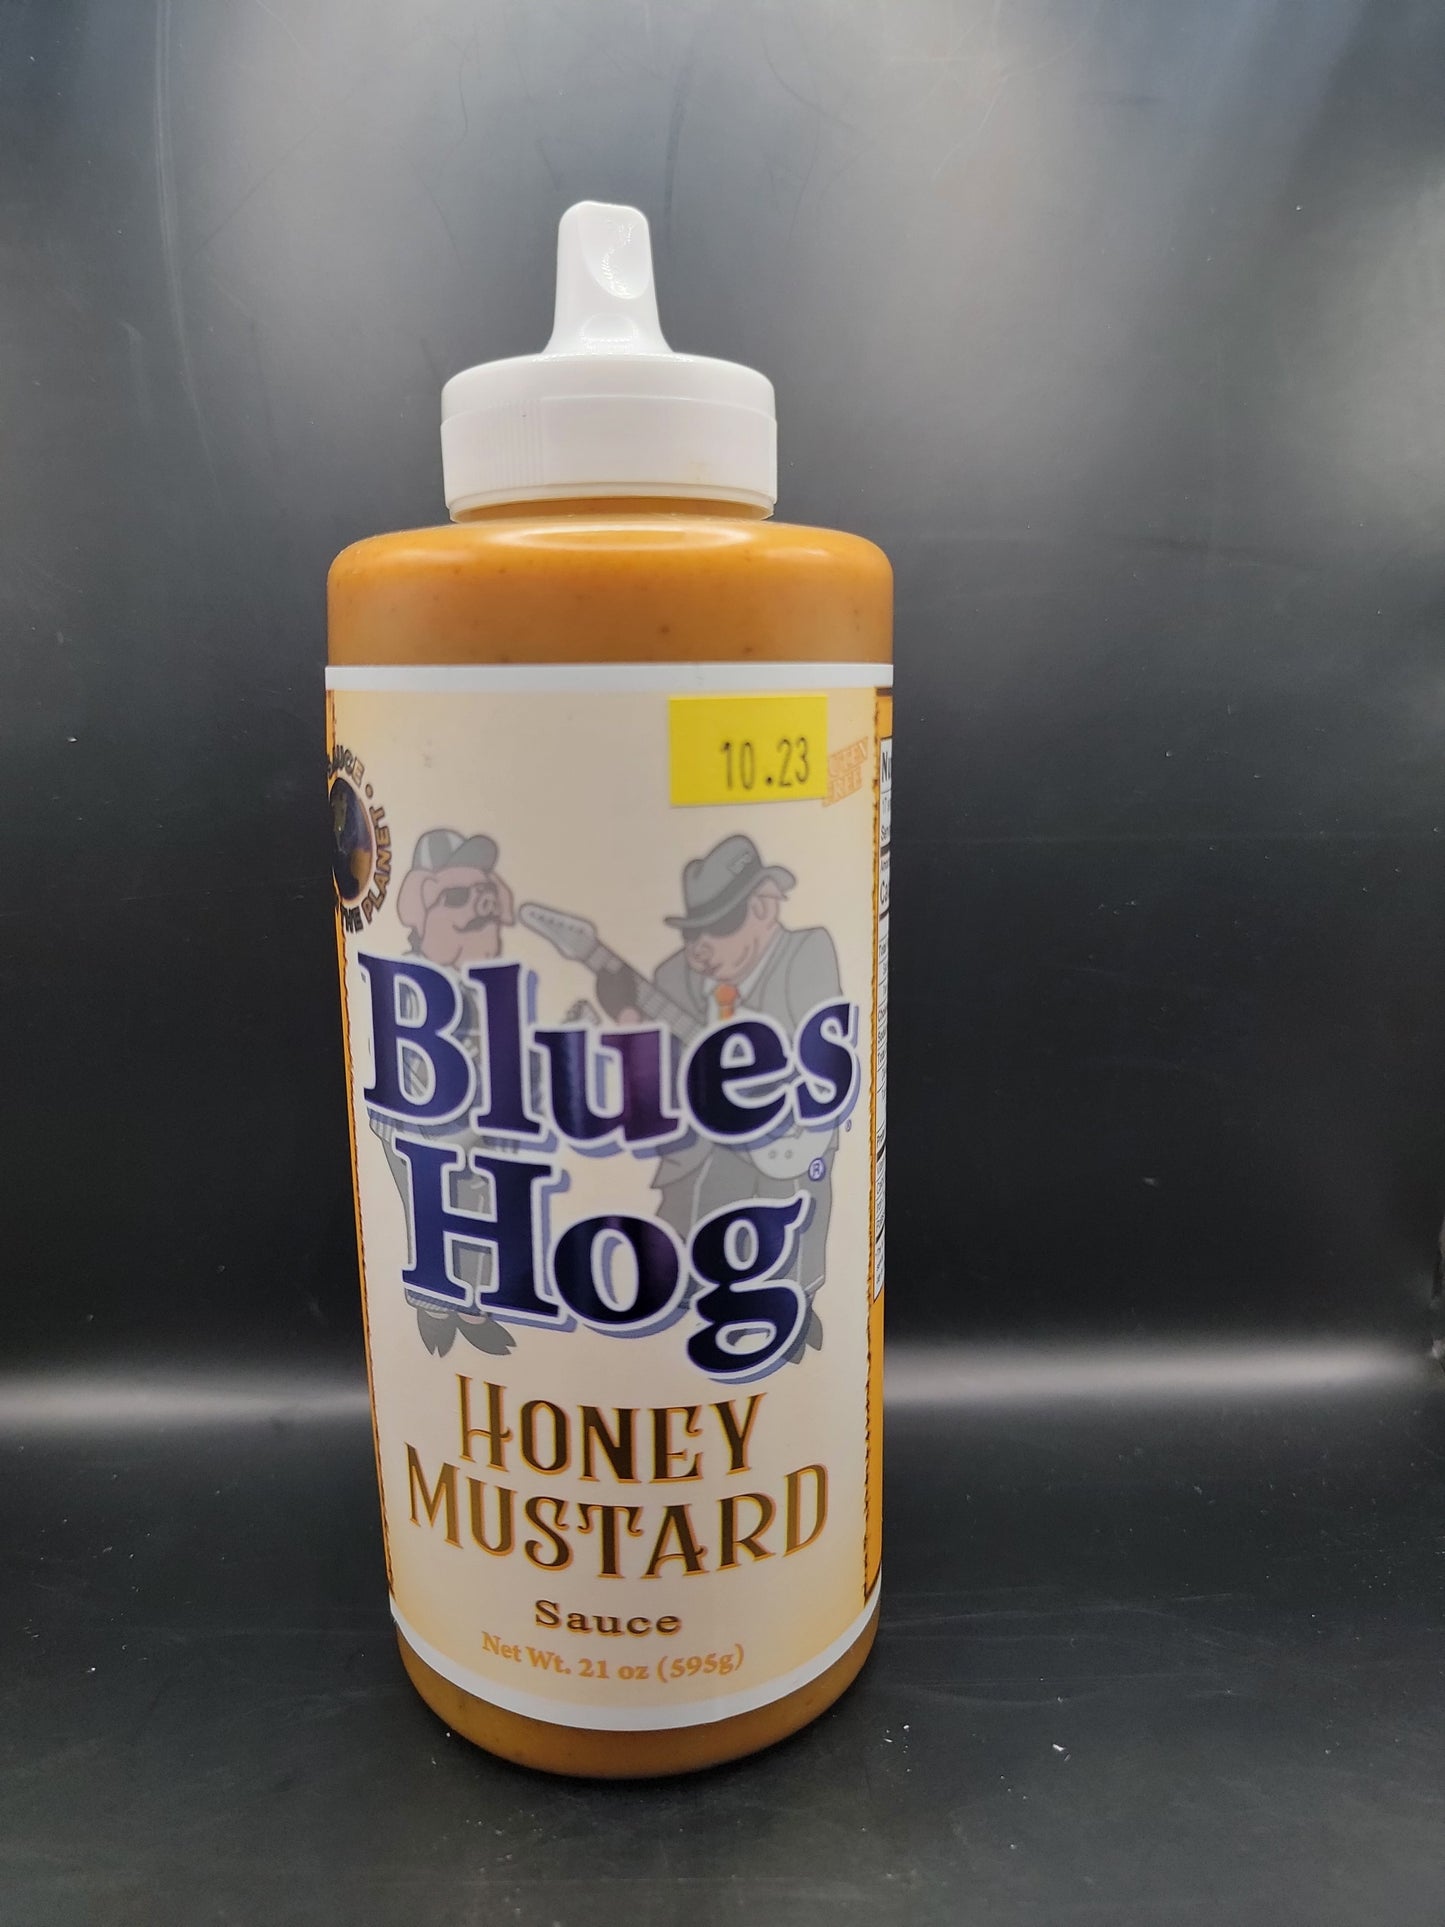 BLUES HOG HONEY MUSTARD SAUCE